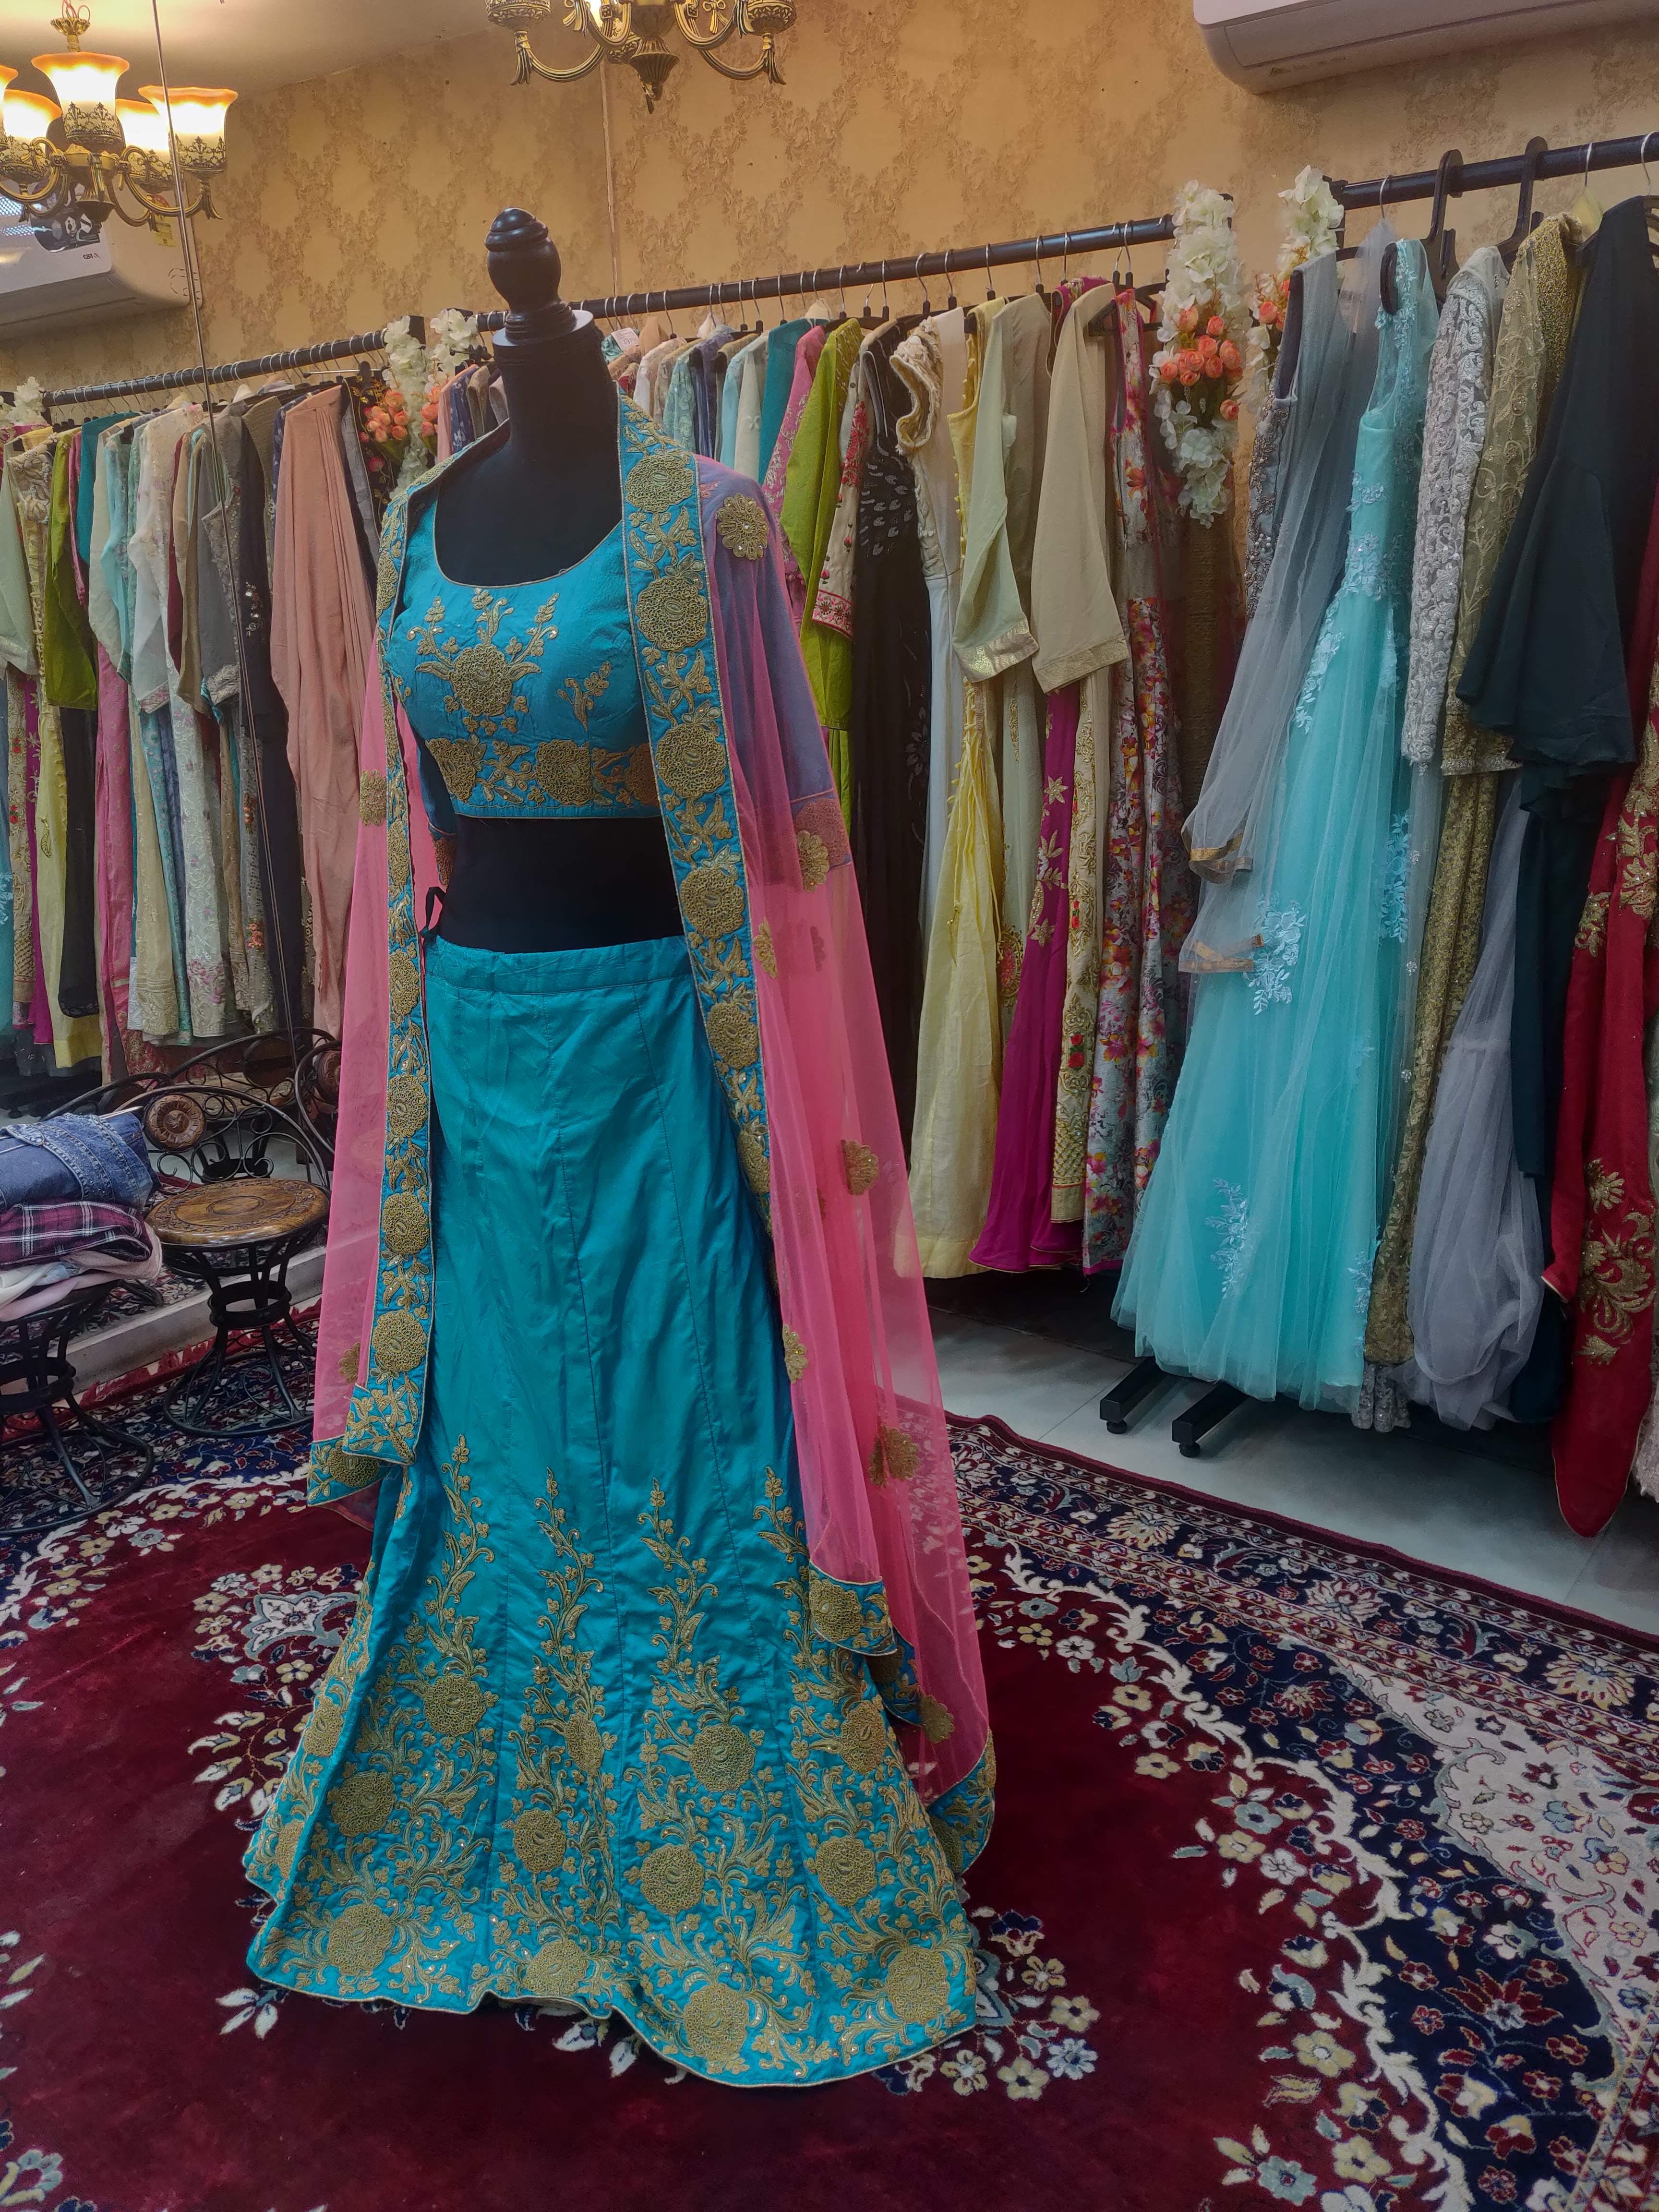 Clothing,Dress,Pink,Boutique,Sari,Textile,Formal wear,Magenta,Room,Fashion design